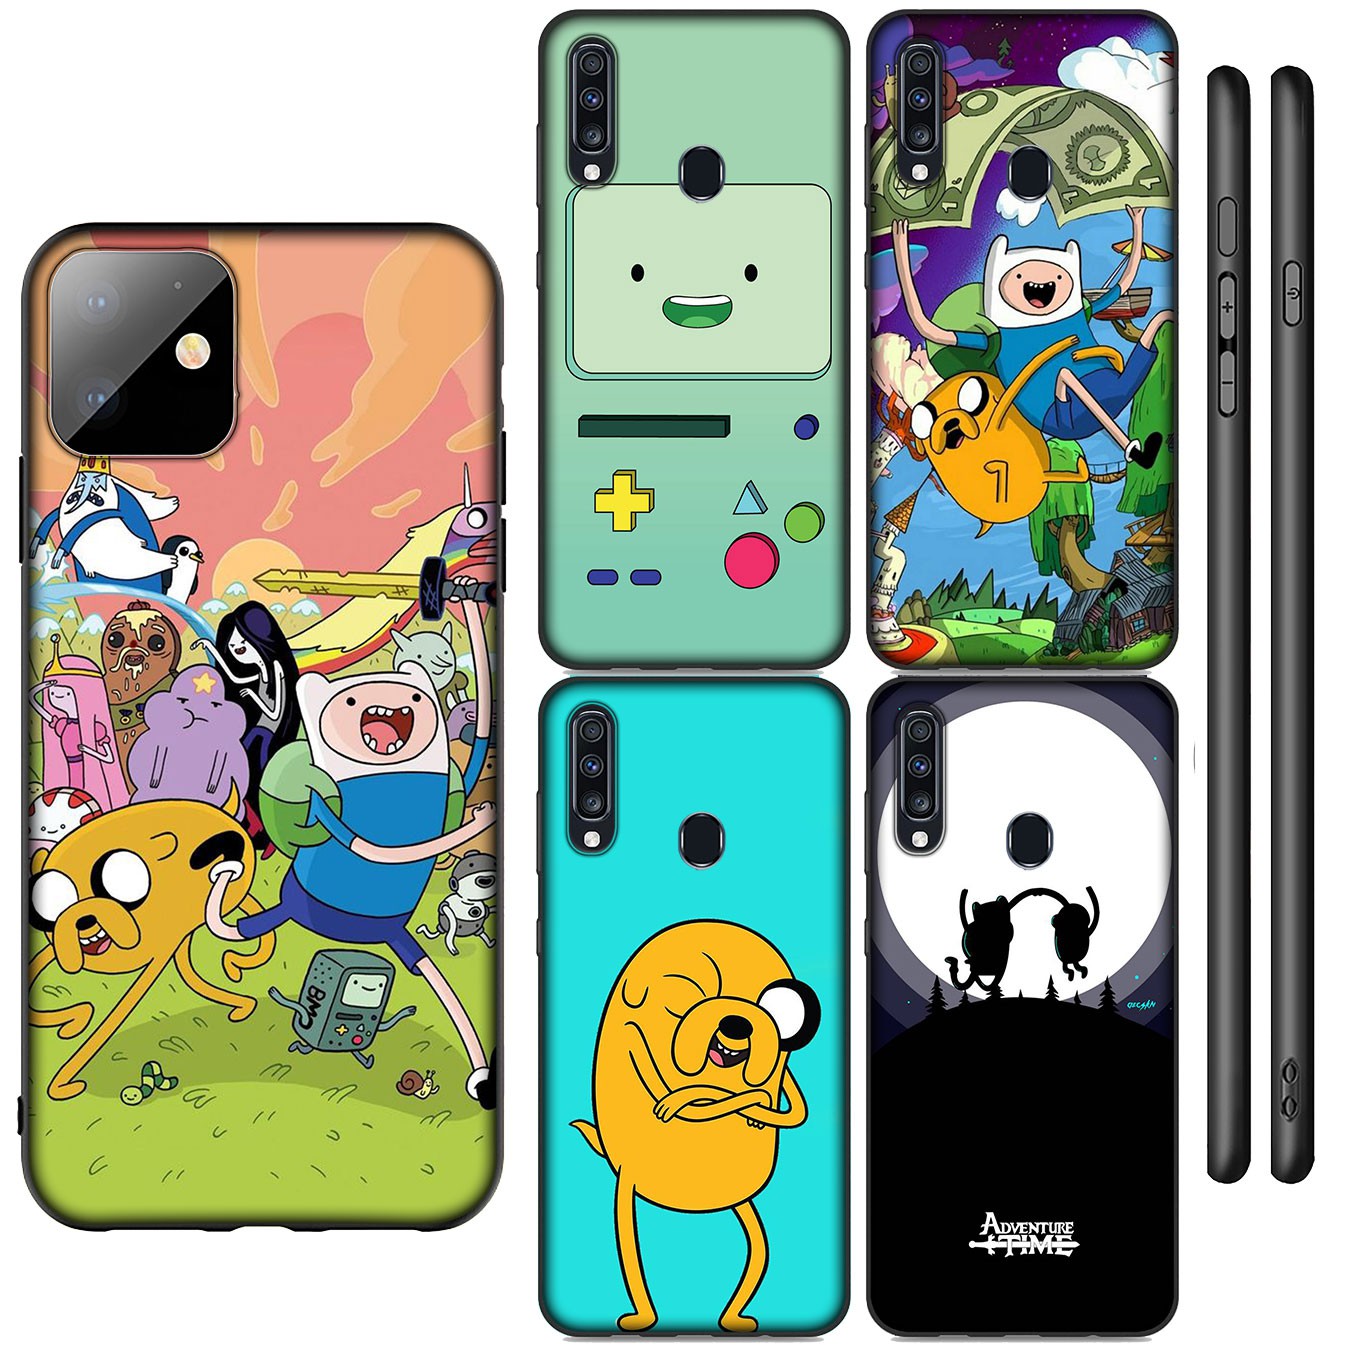 Samsung Galaxy A9 A8 A7 A6 Plus J8 2018 + A21S A70 M20 A6+ A8+ 6Plus Casing Soft Silicone Cartoon adventure time Phone Case